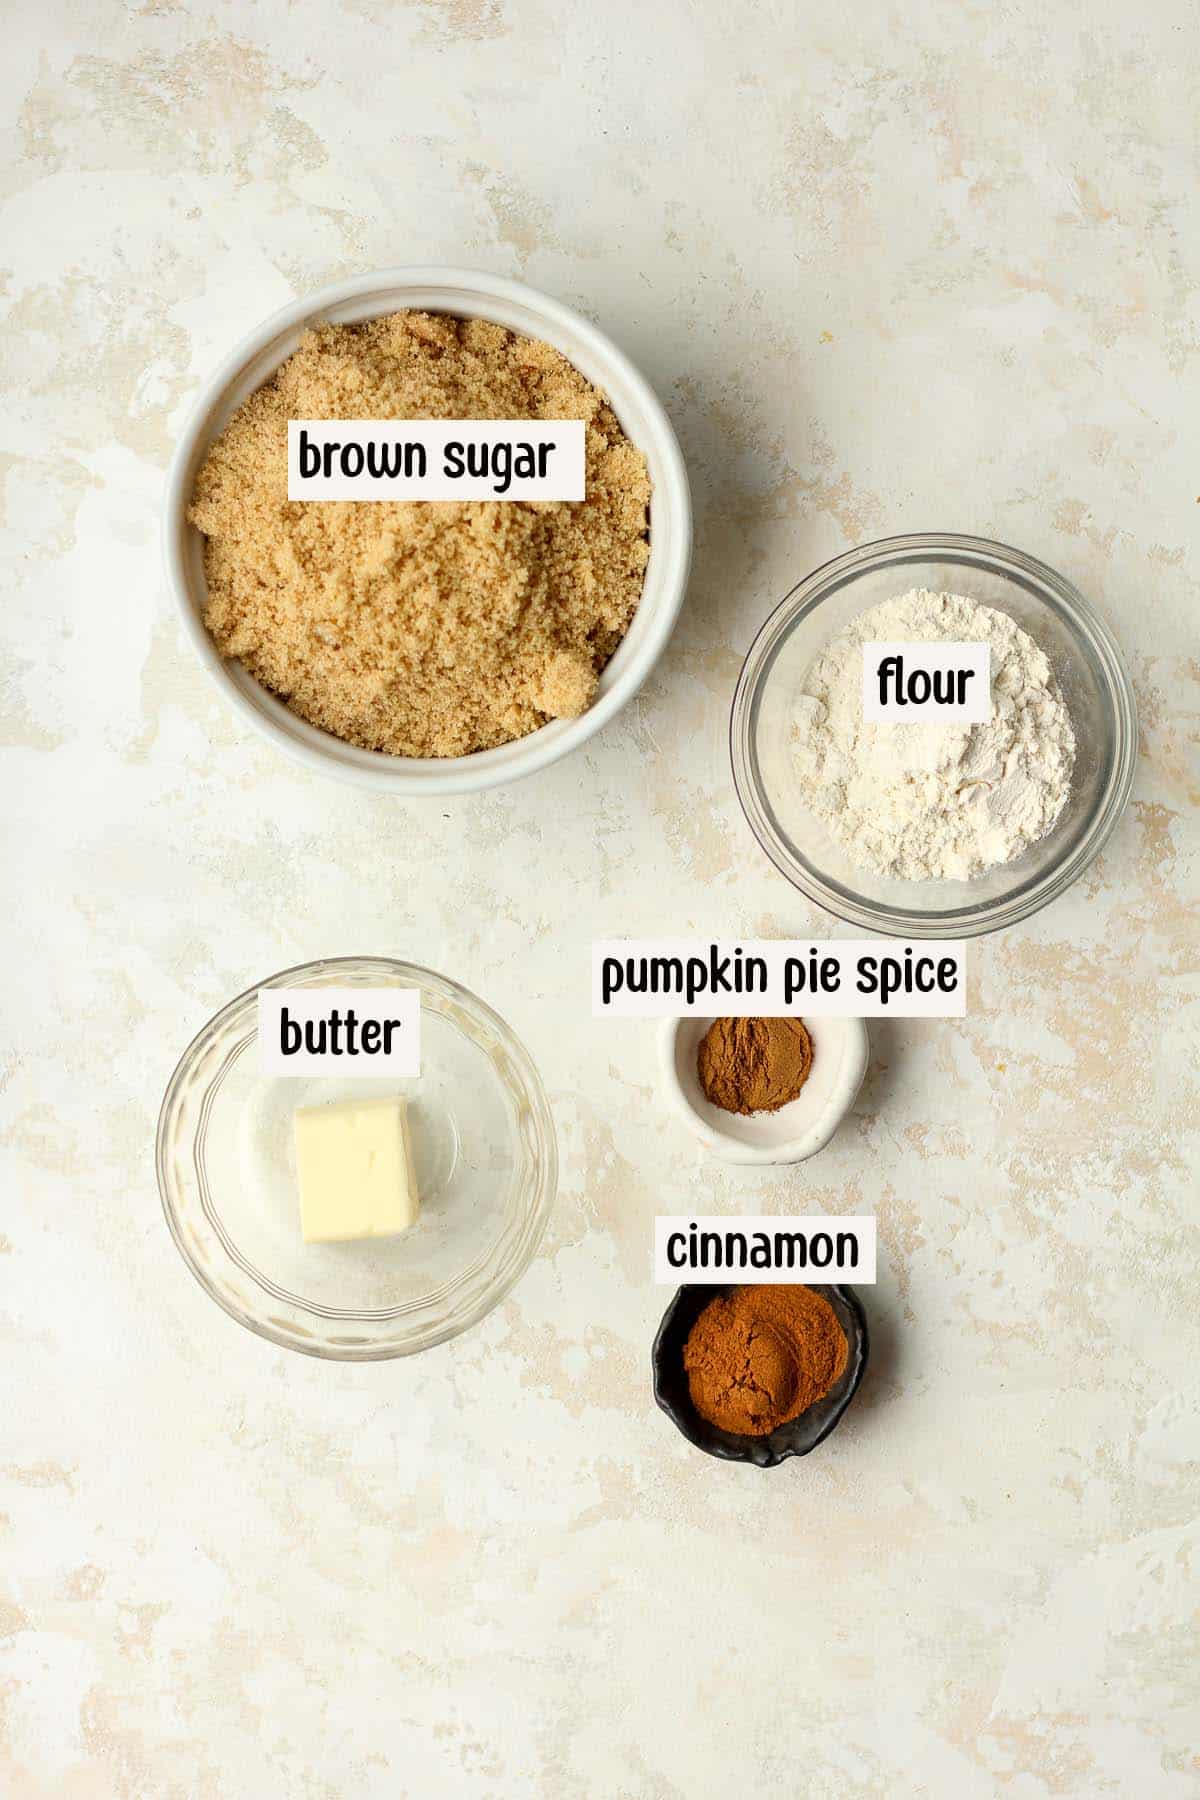 The pumpkin streusel ingredients, labeled.